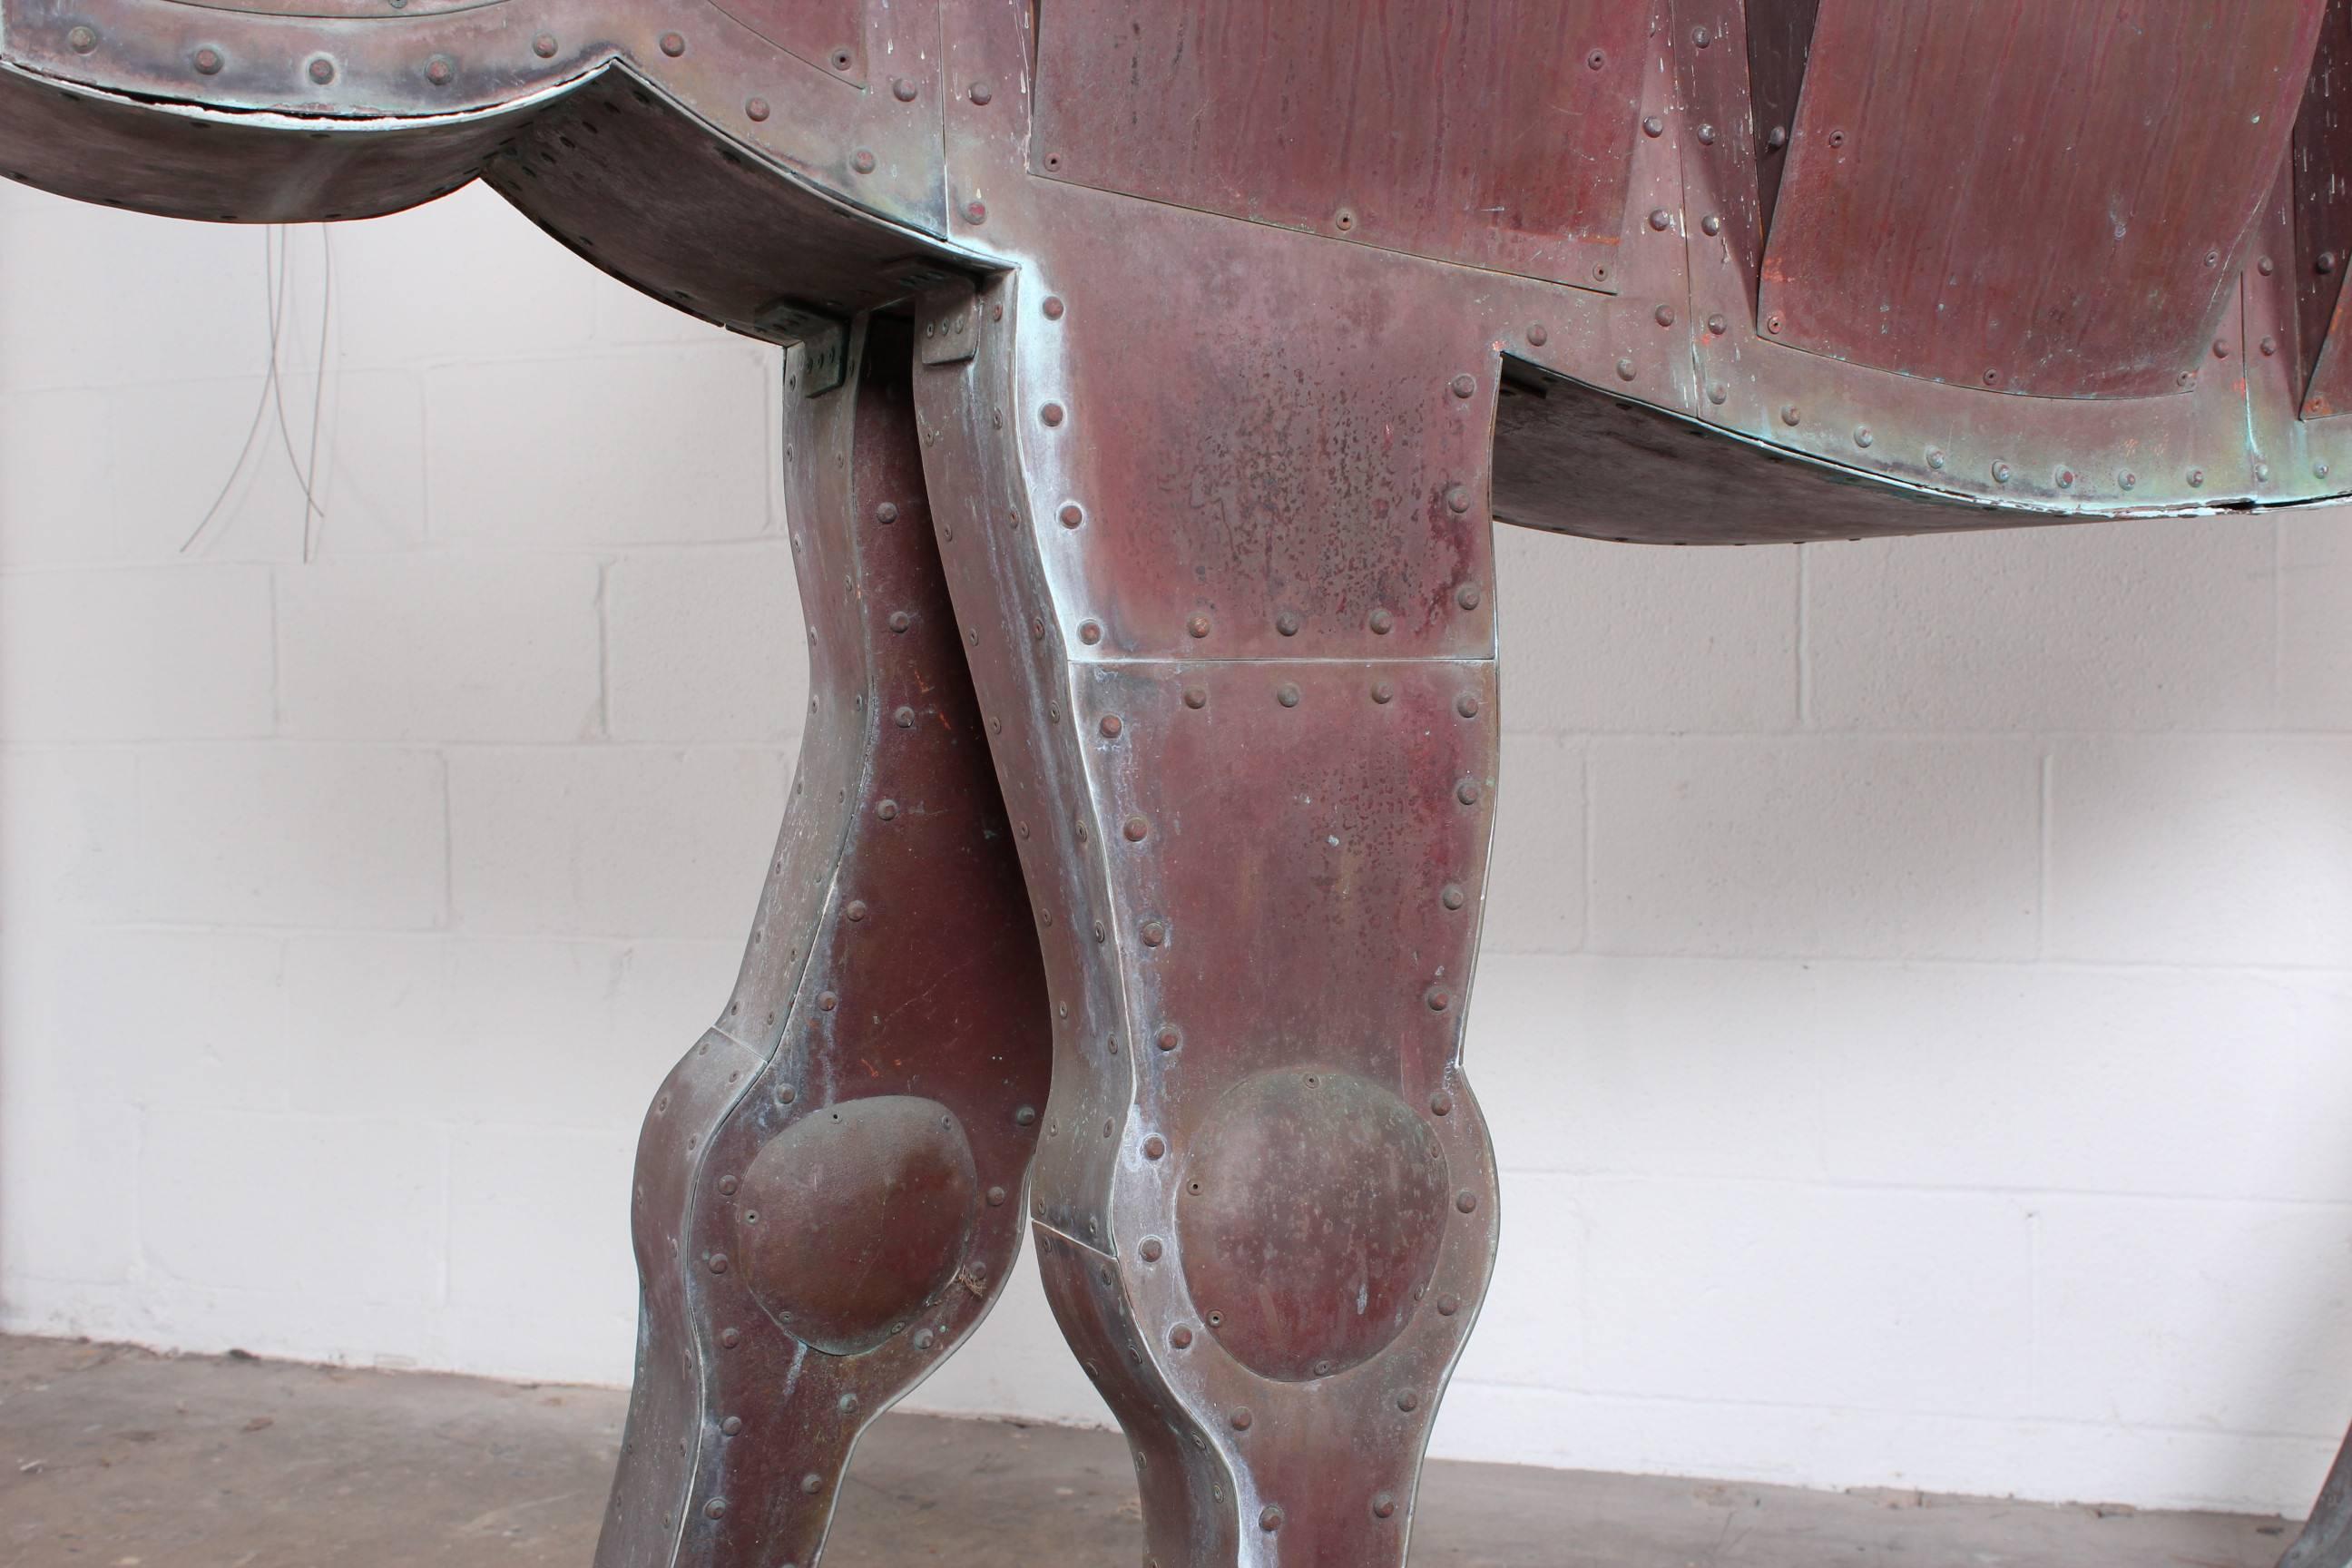 A lifesize patinated copper camel sculpture by Ken Kalman, 2006.